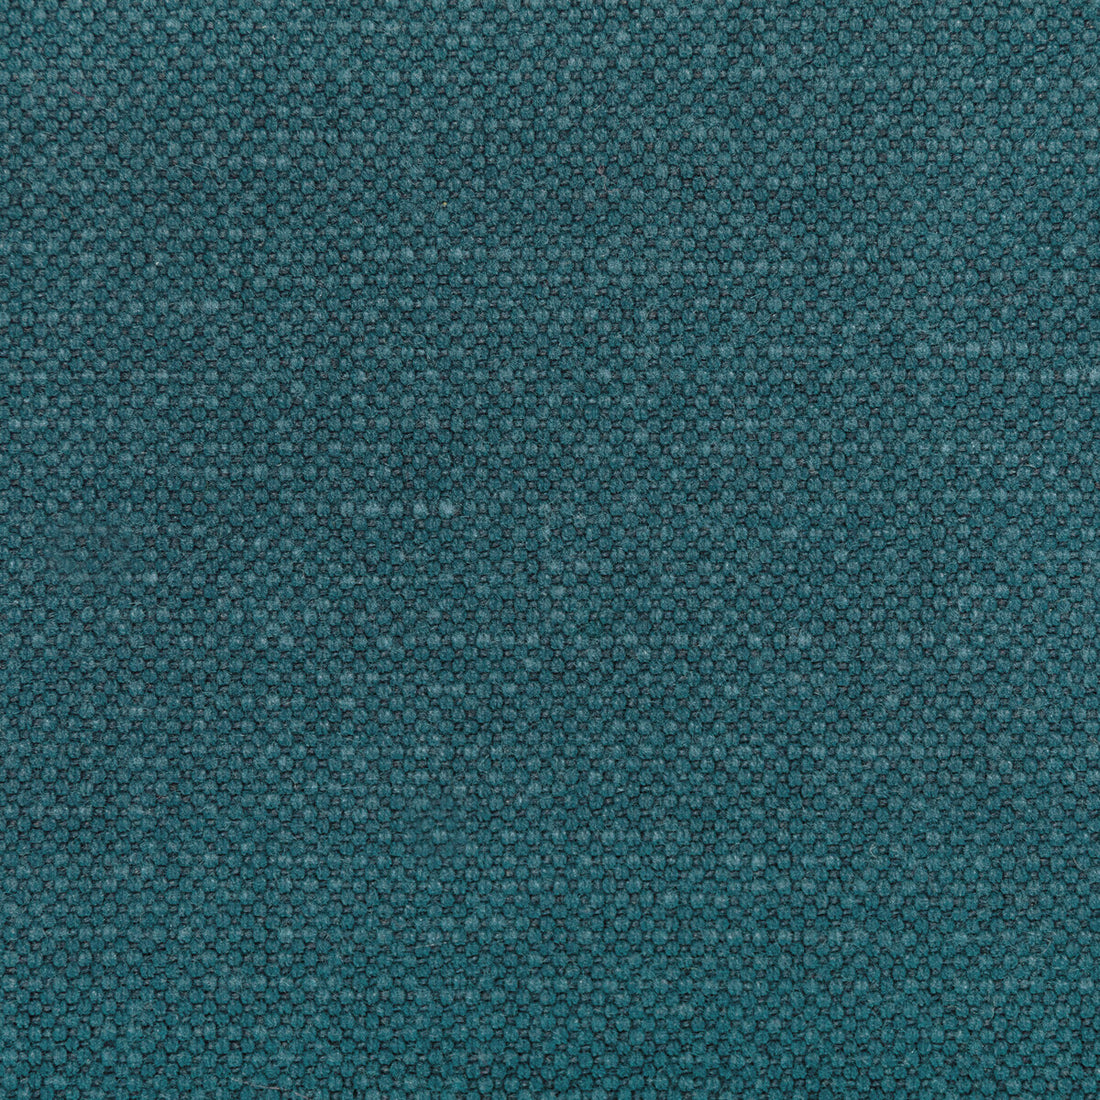 Carson fabric in bermuda color - pattern 36282.3550.0 - by Kravet Basics